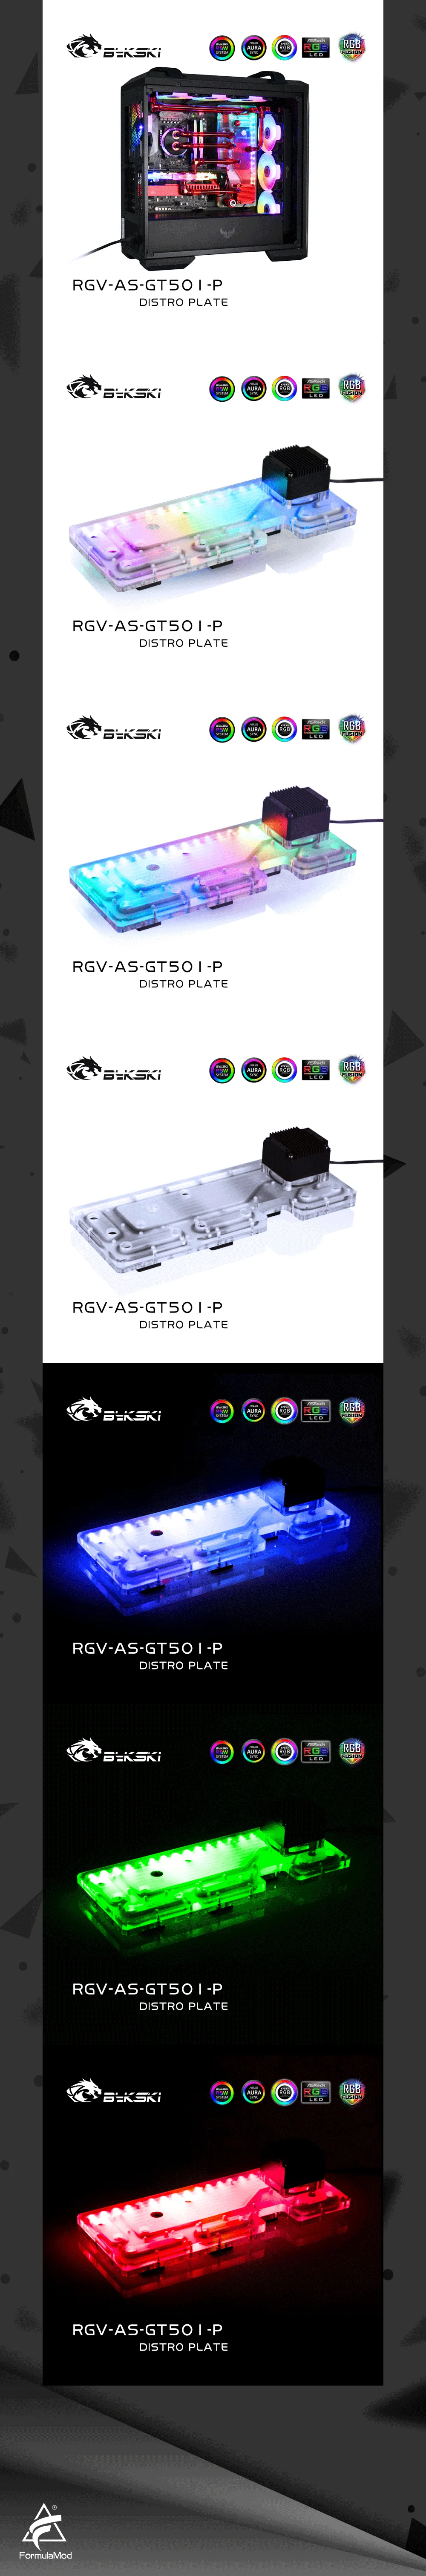 Bykski Waterway Cooling Kit For ASUS TUF GT501 Case, 5V ARGB, For Single GPU Building, RGV-AS-GT501-P  